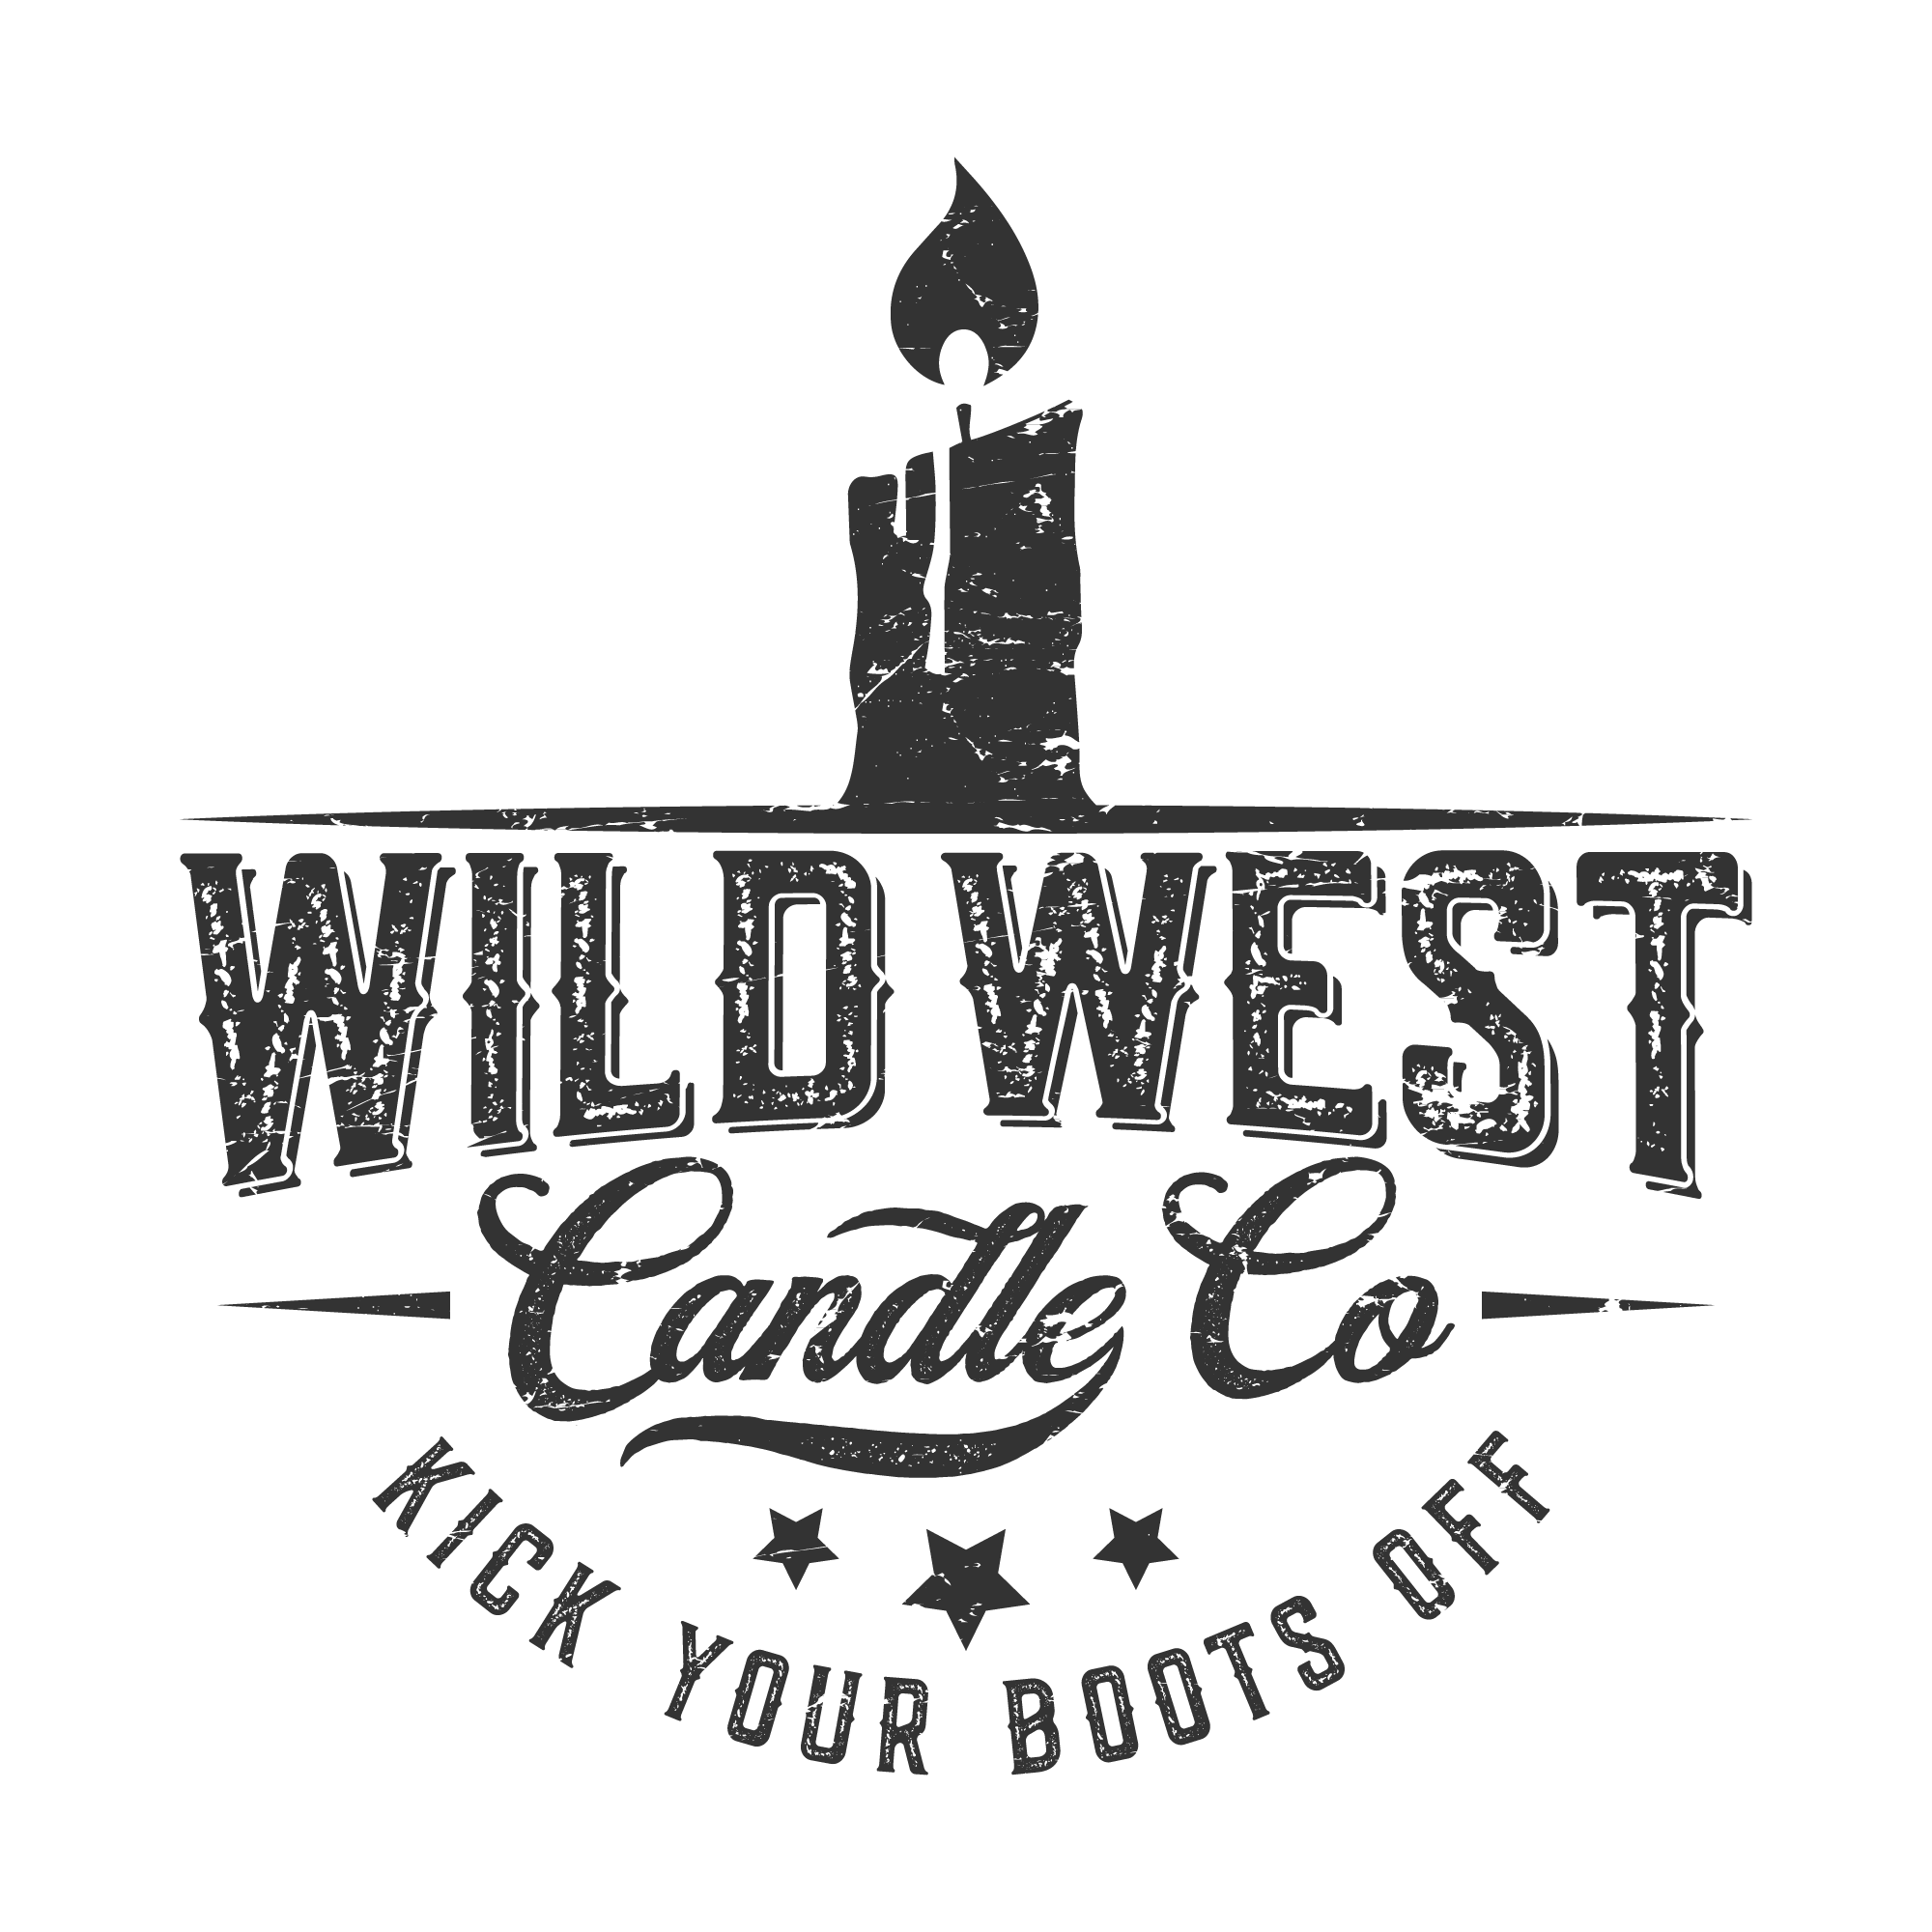 Wild West Candles